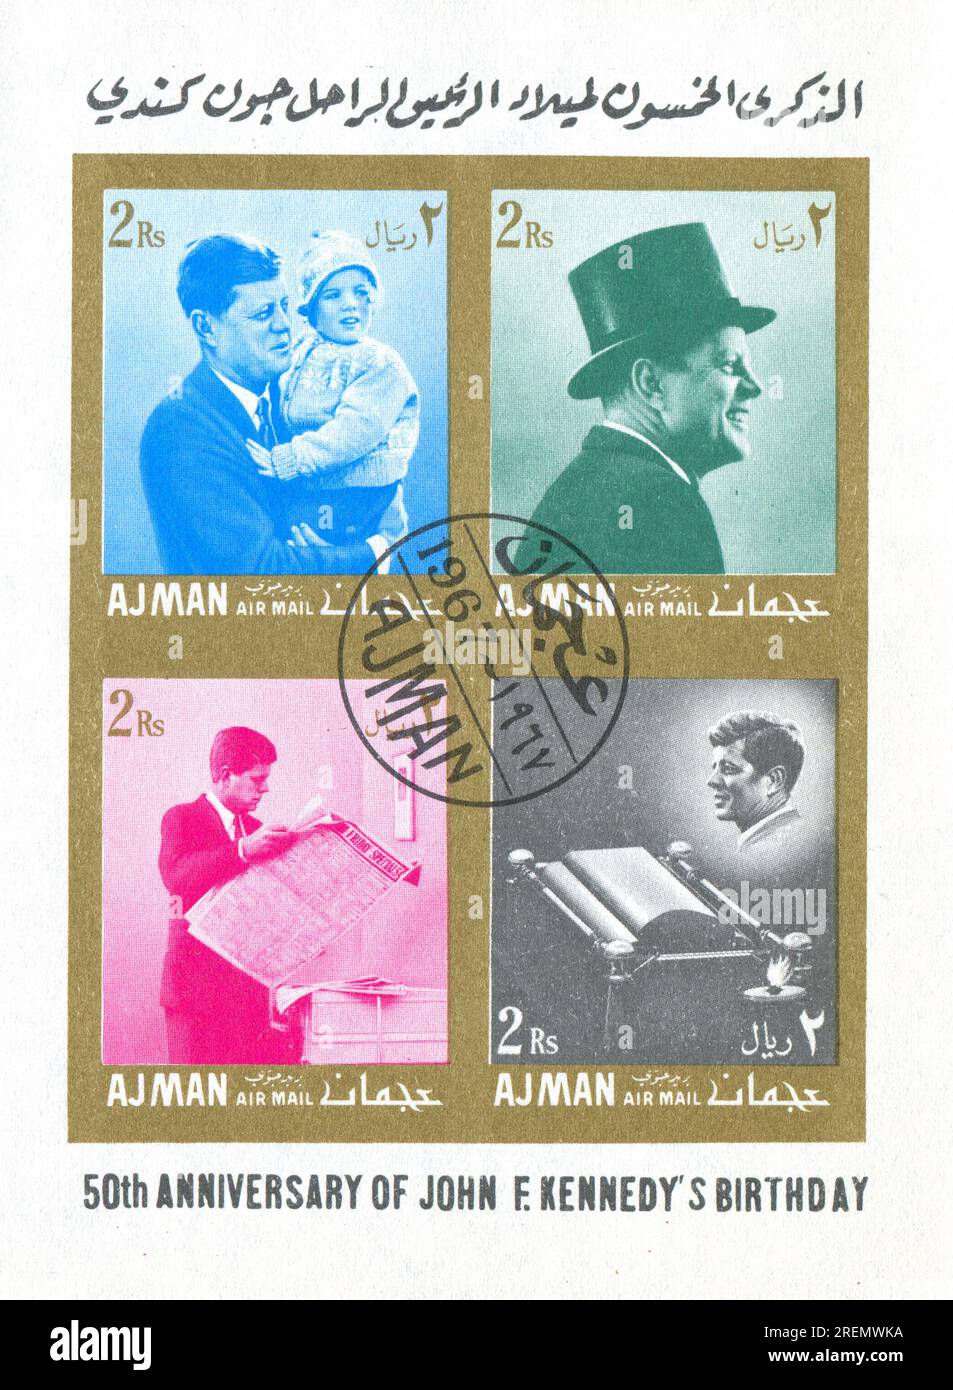 AJMAN - CIRCA 1967: Von Ajman gedruckter Stempel zeigt, dass John Fitzgerald Kennedy Präsident der Vereinigten Staaten war, circa 1967. Stockfoto